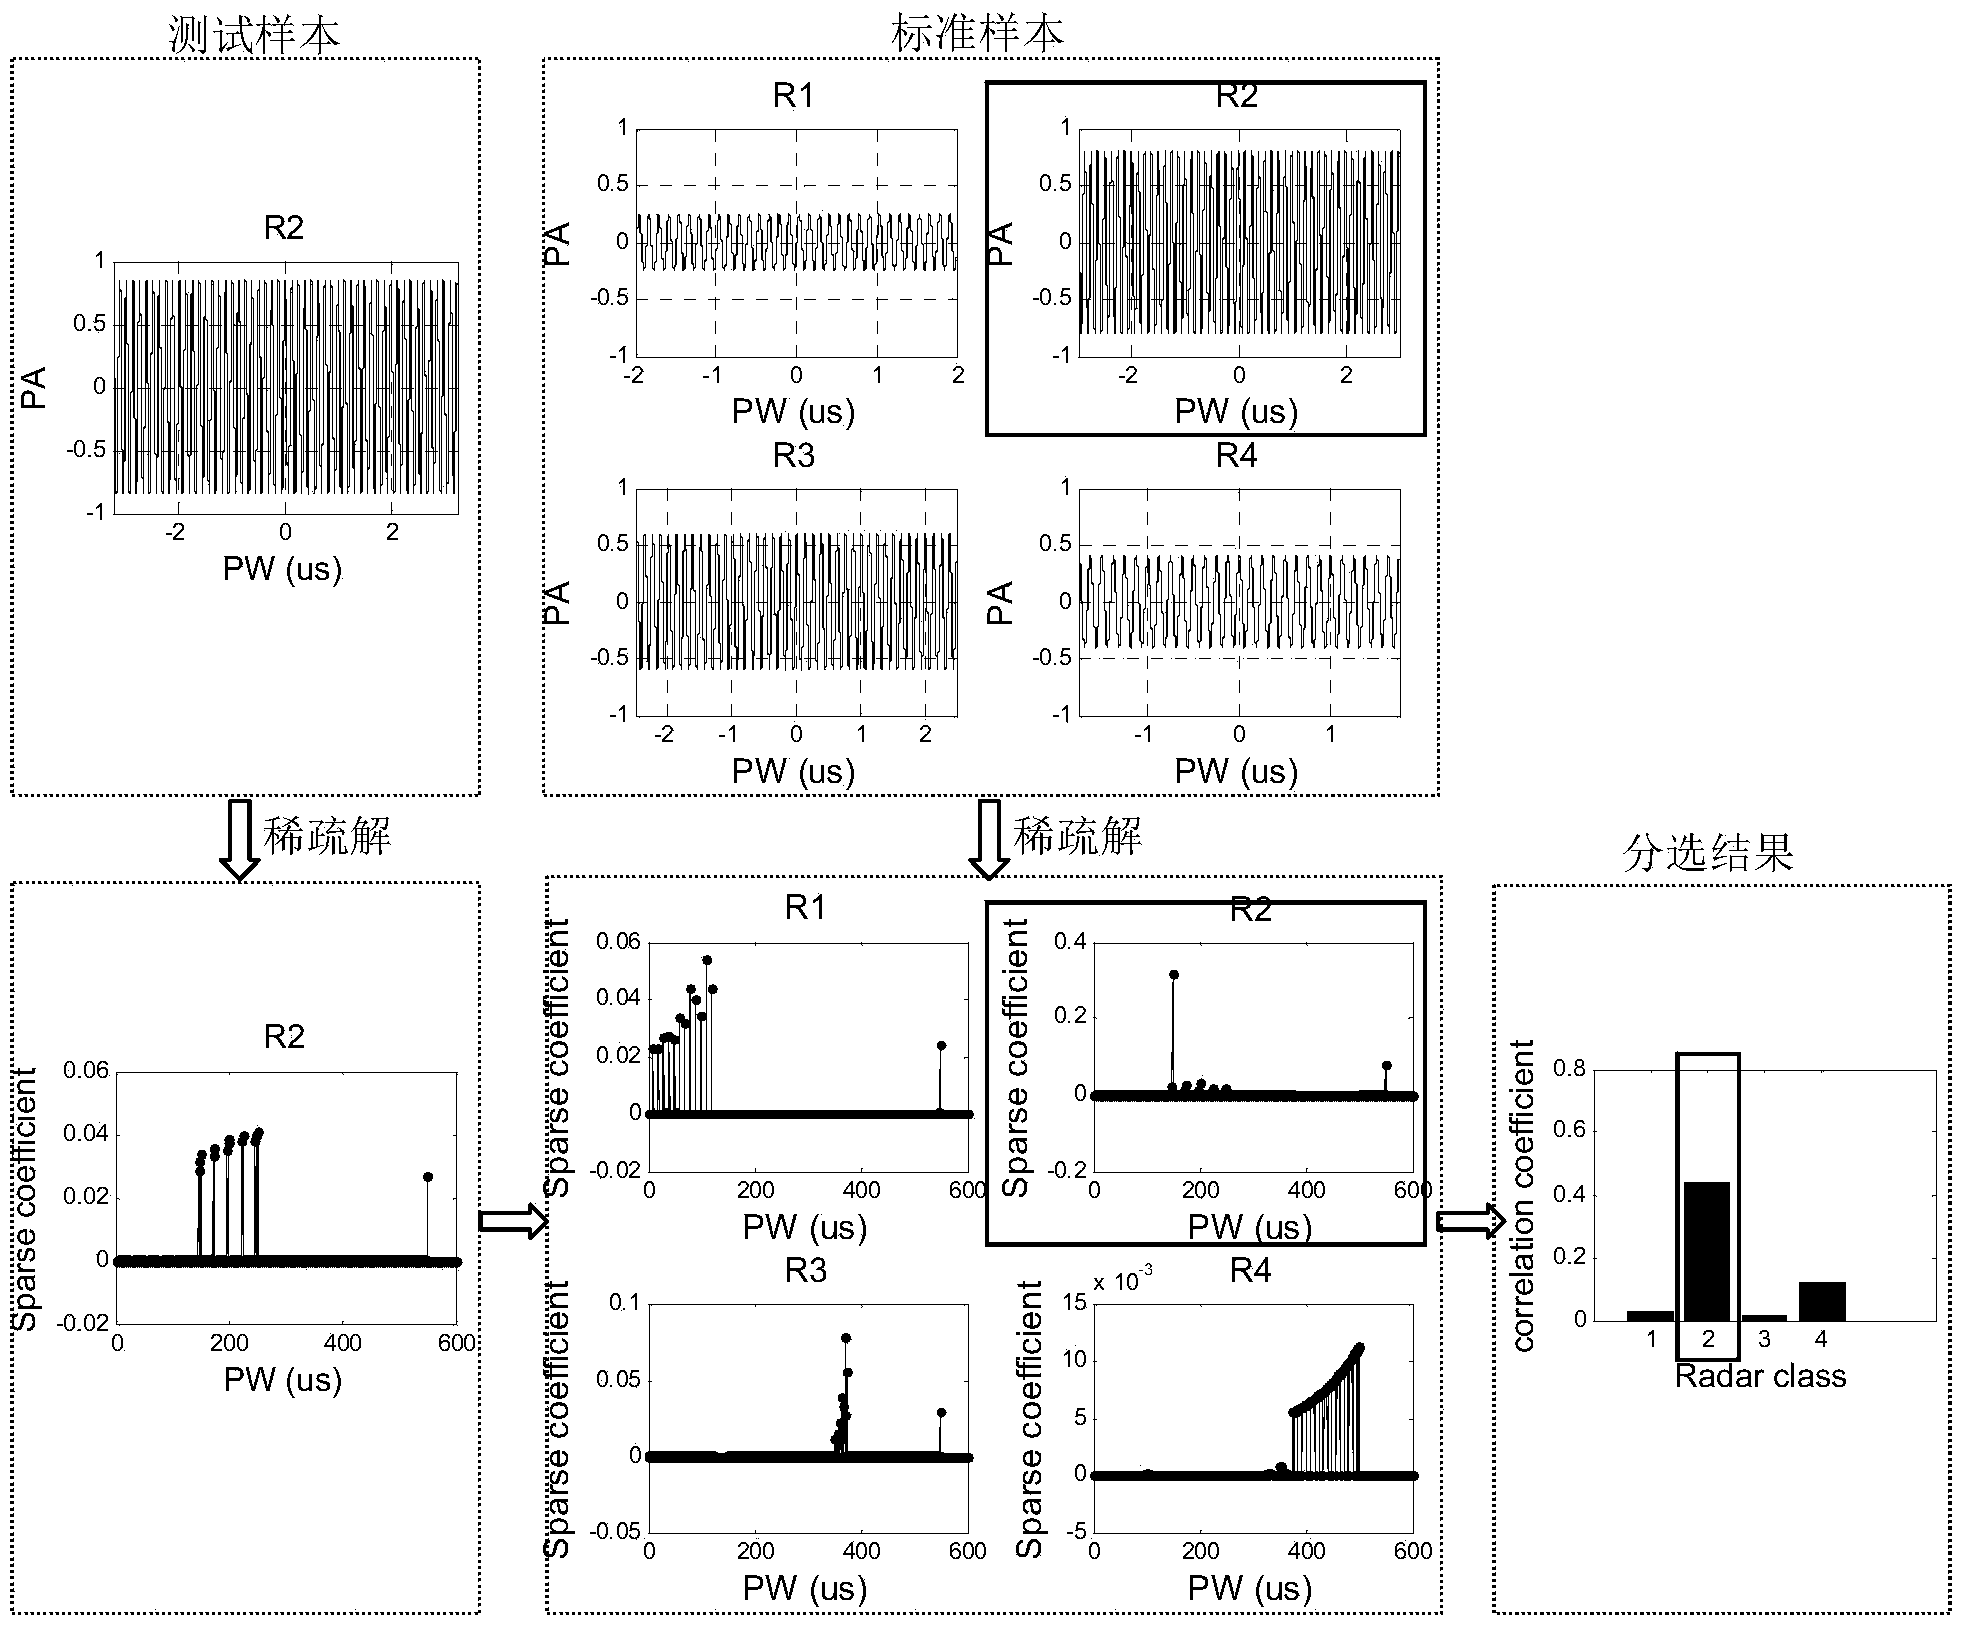 Radar signal sorting method under minimum L1 bound norm